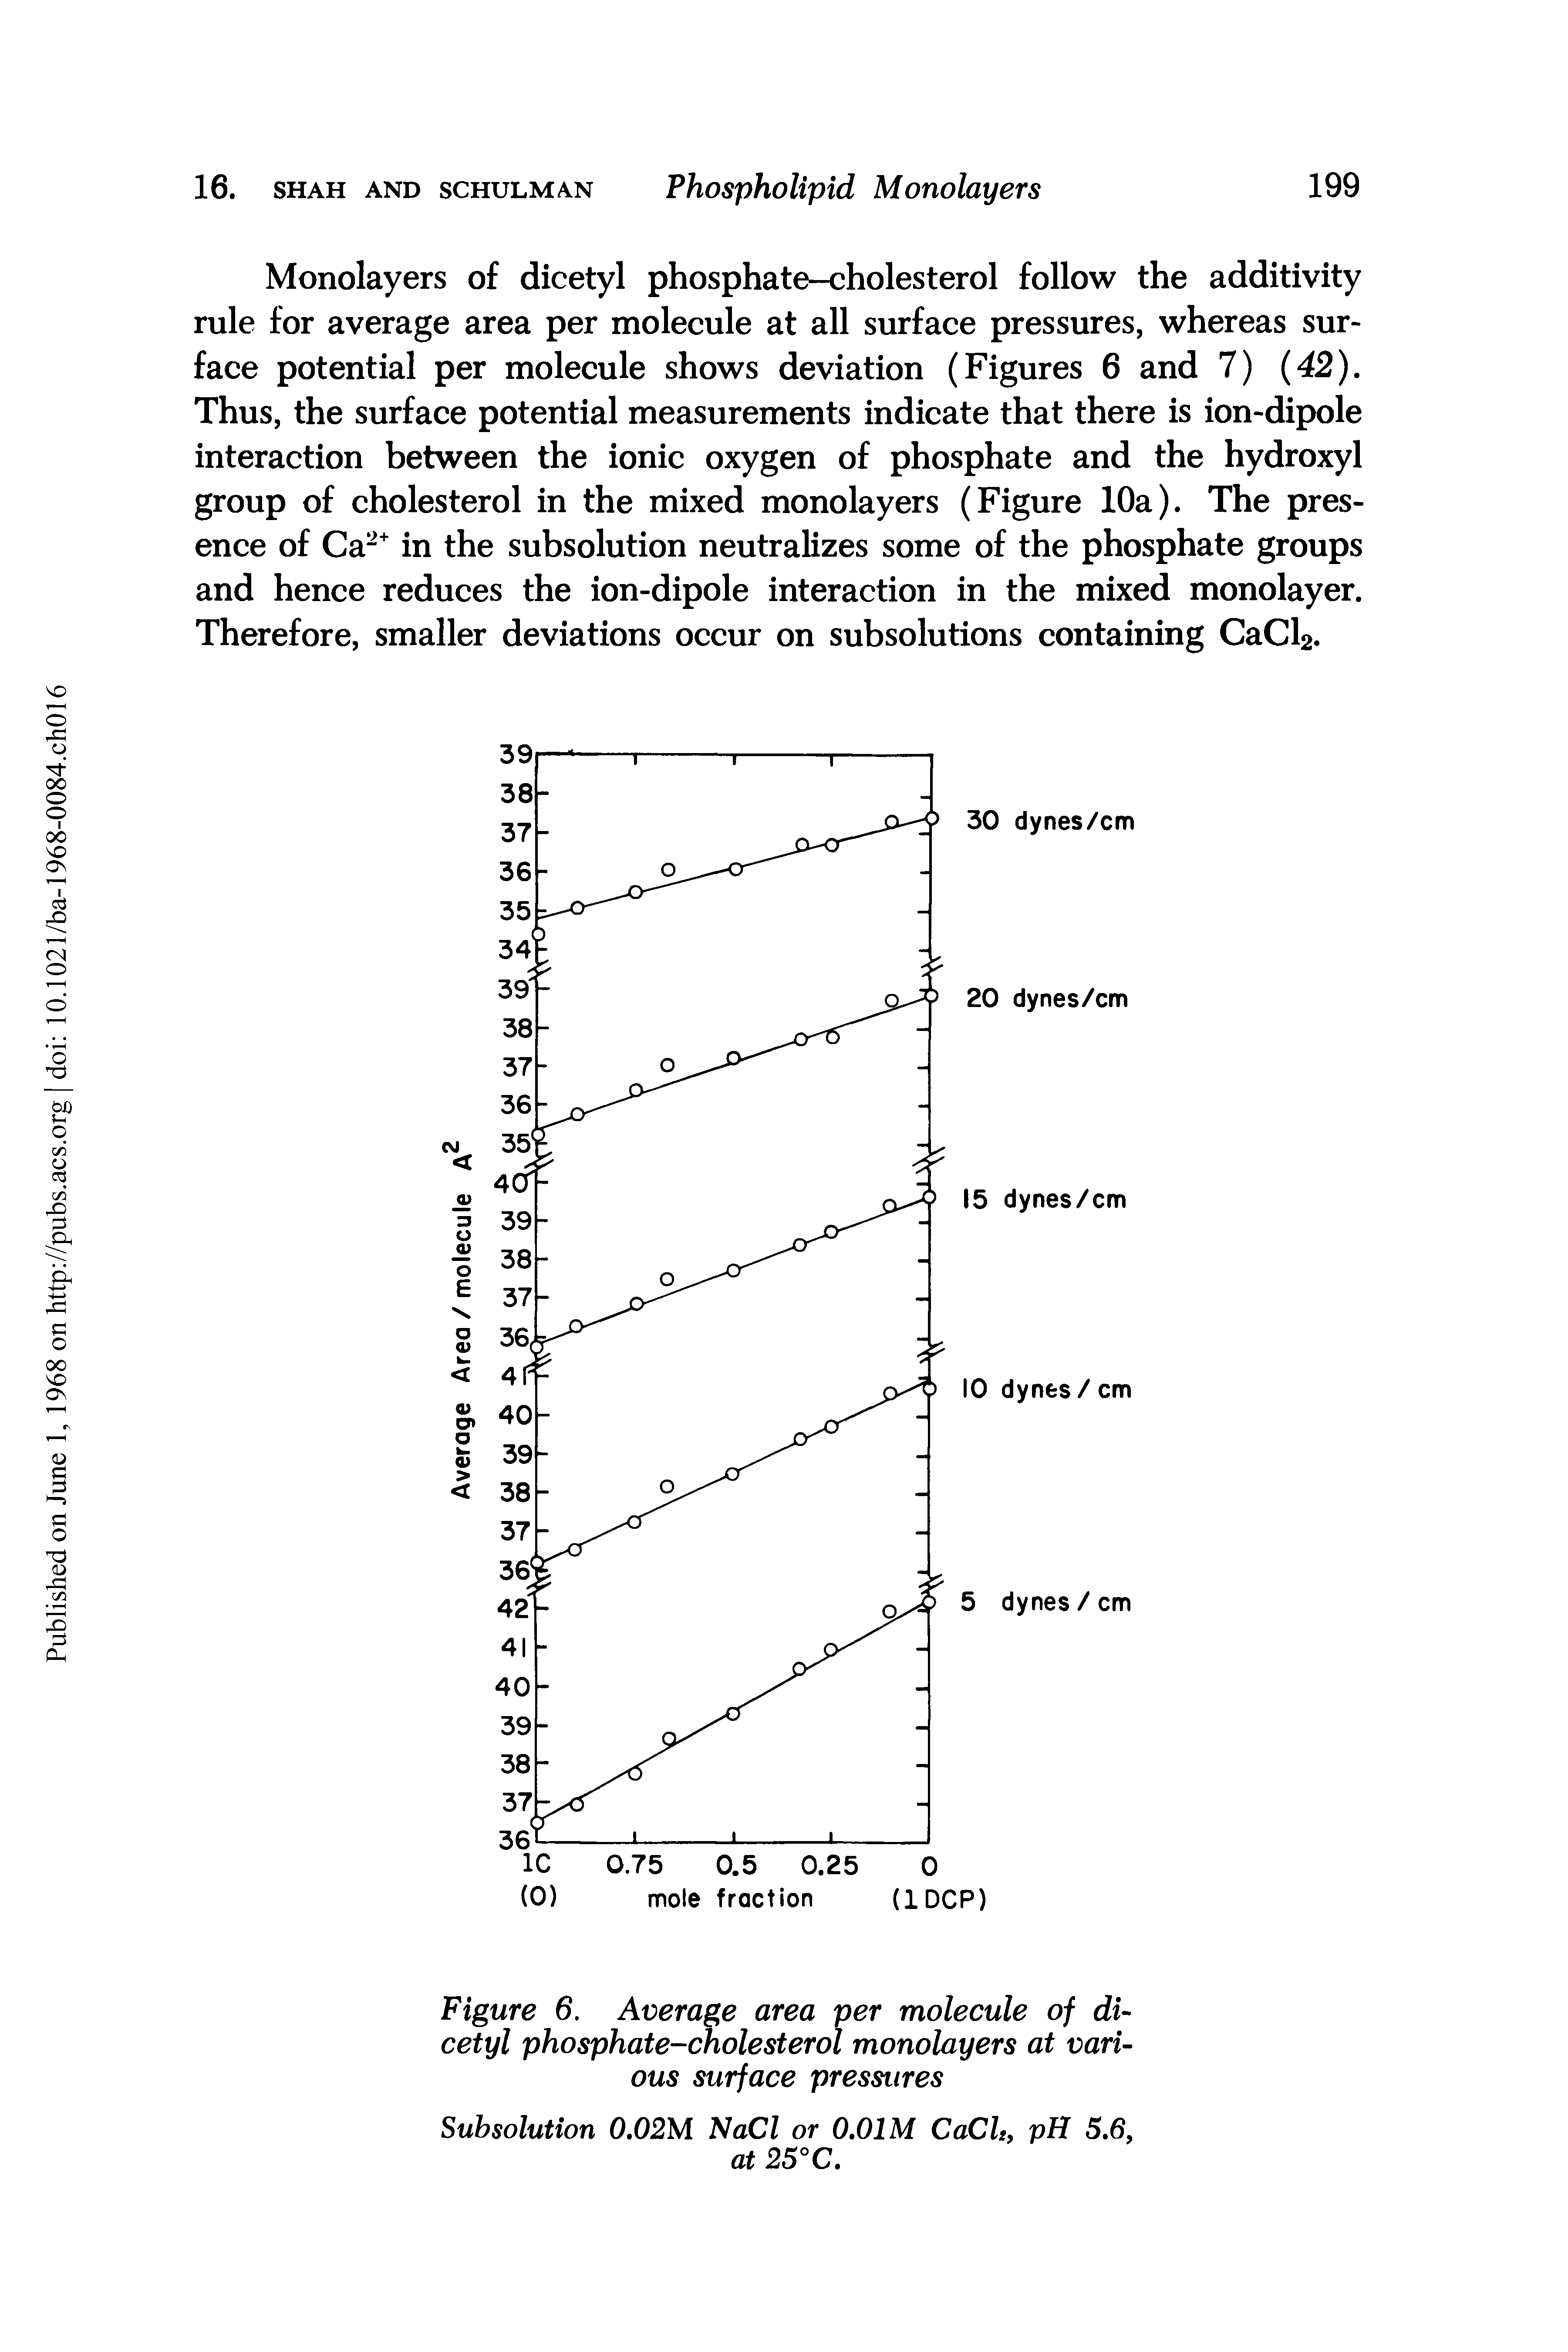 Figure 6. Average area per molecule of dicetyl phosphate-cholesterol monolayers at various surface pressures...